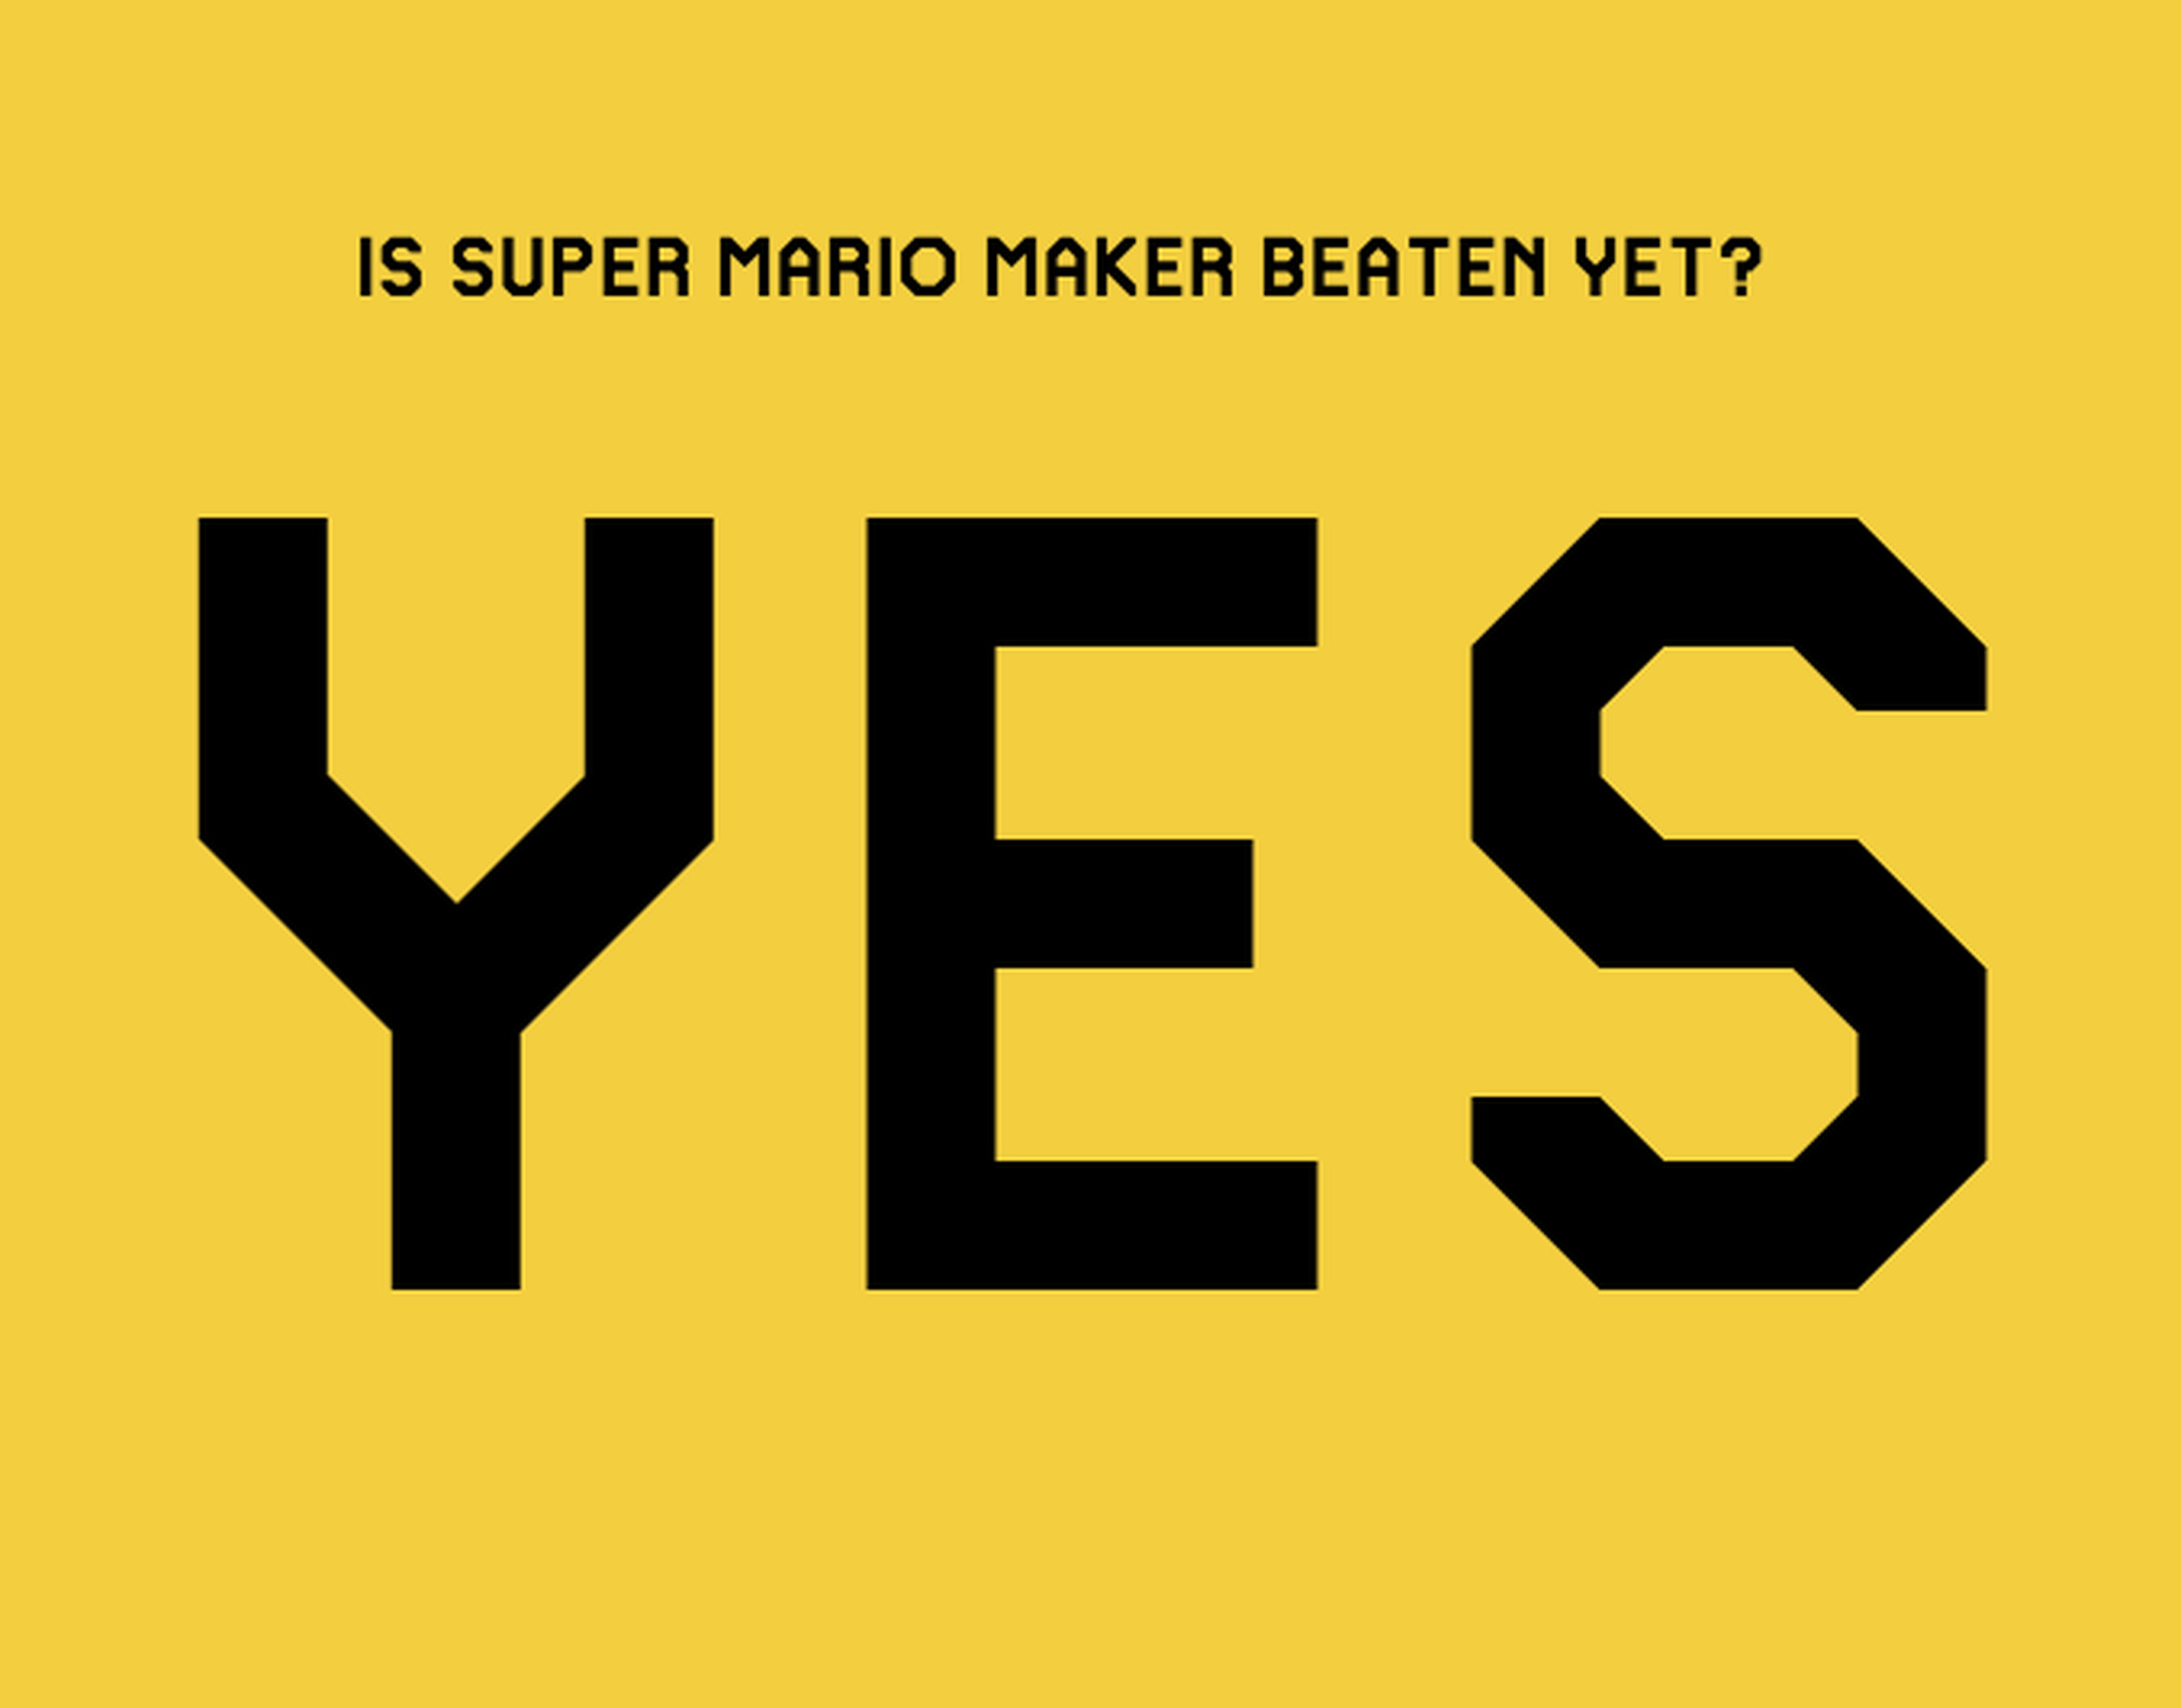 A screenshot from issmmbeatenyet.com, reading “Is Super Mario Maker beaten yet? YES”